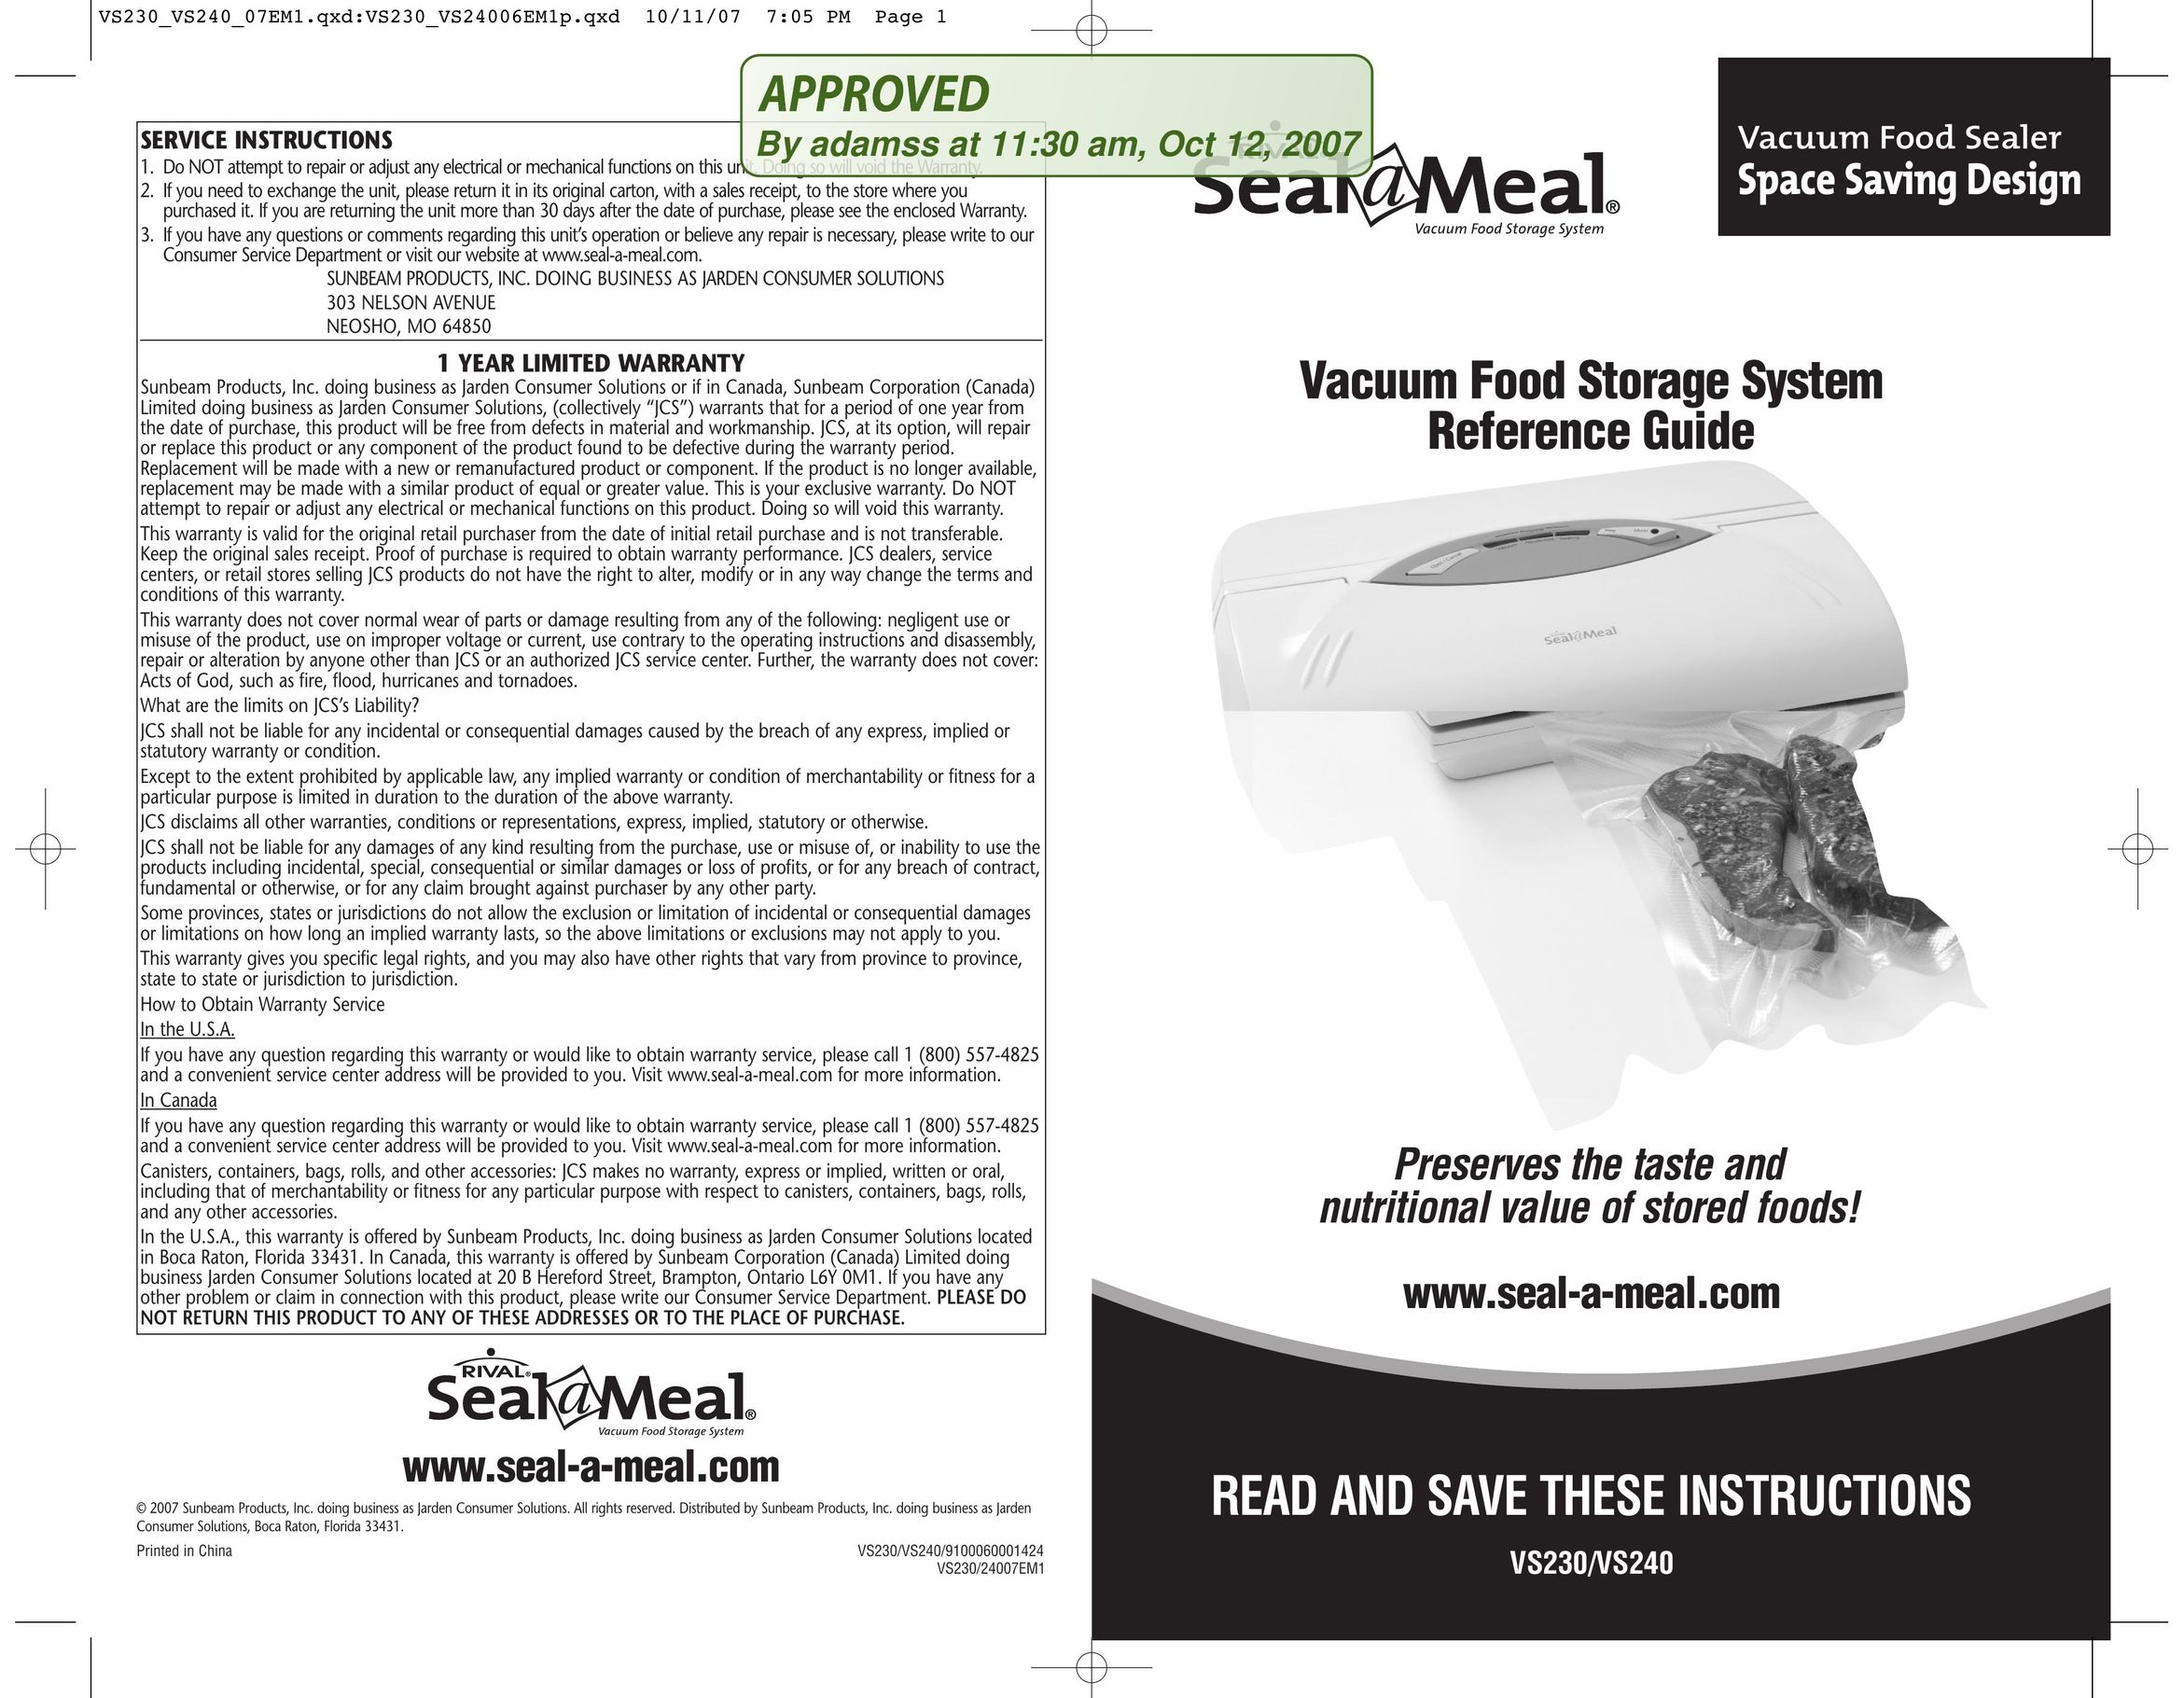 Seal-a-Meal VS240 Food Saver User Manual